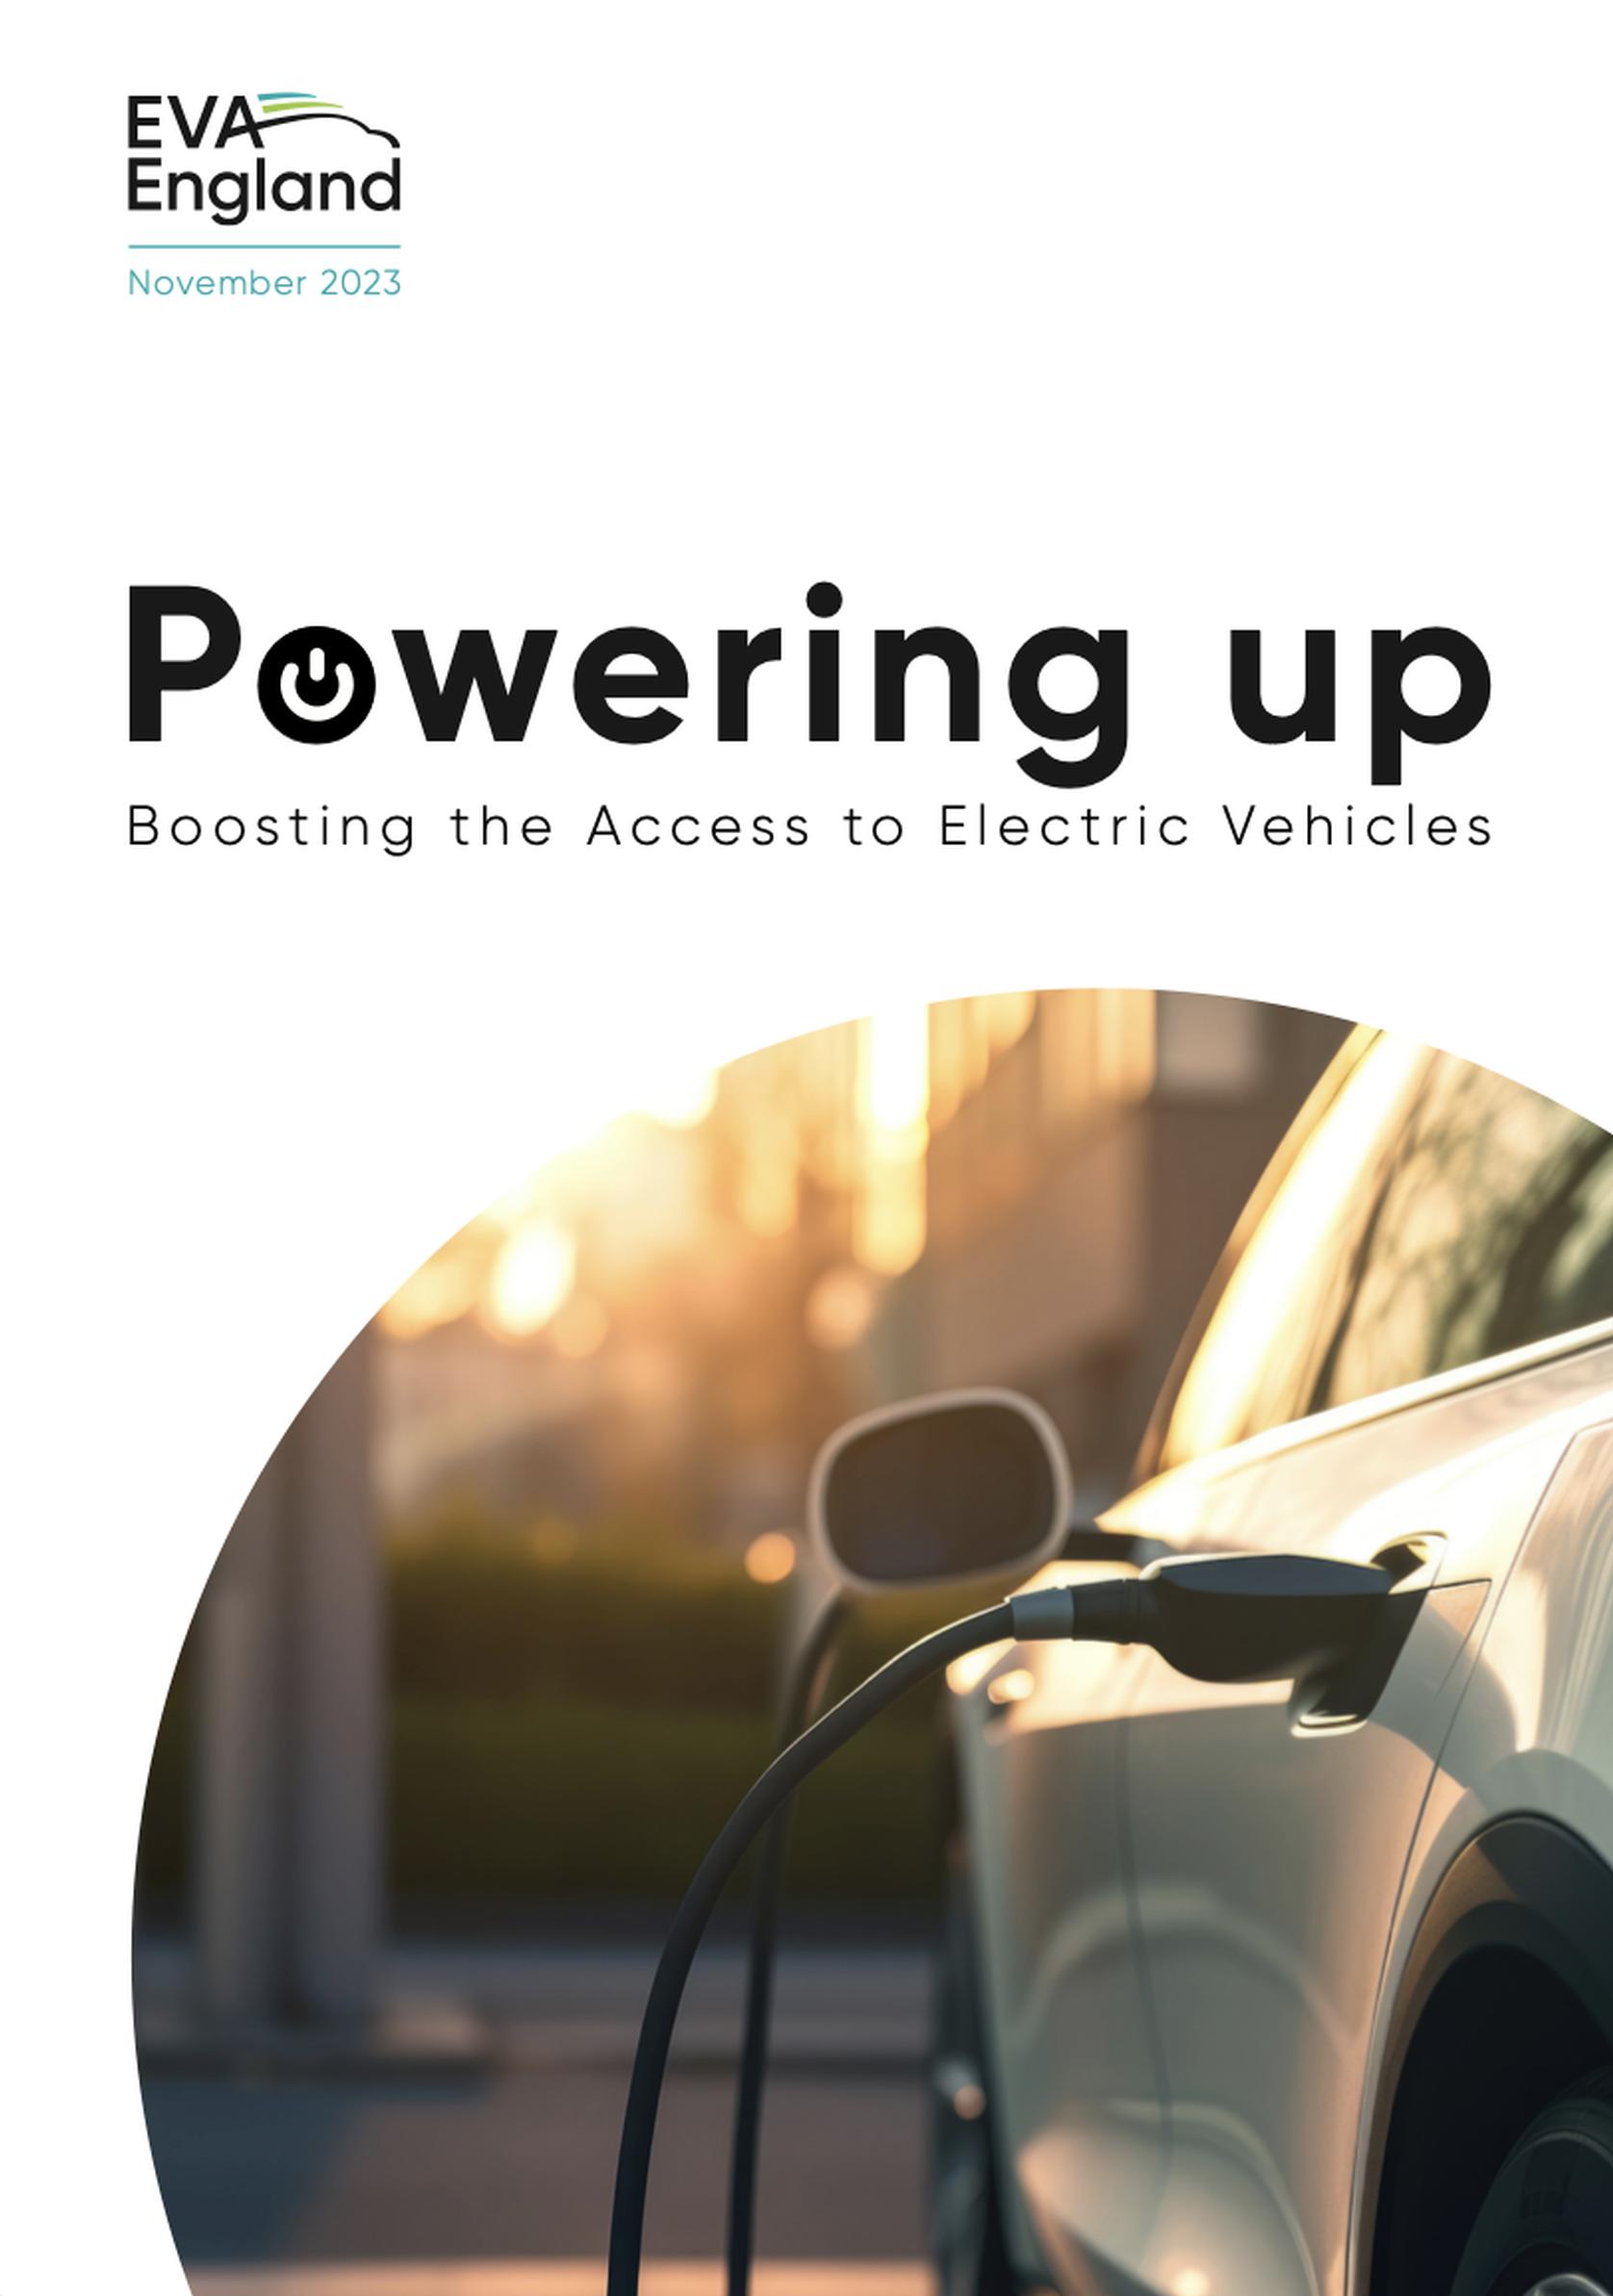 EVA England maps path to opening up electric vehicle ownership